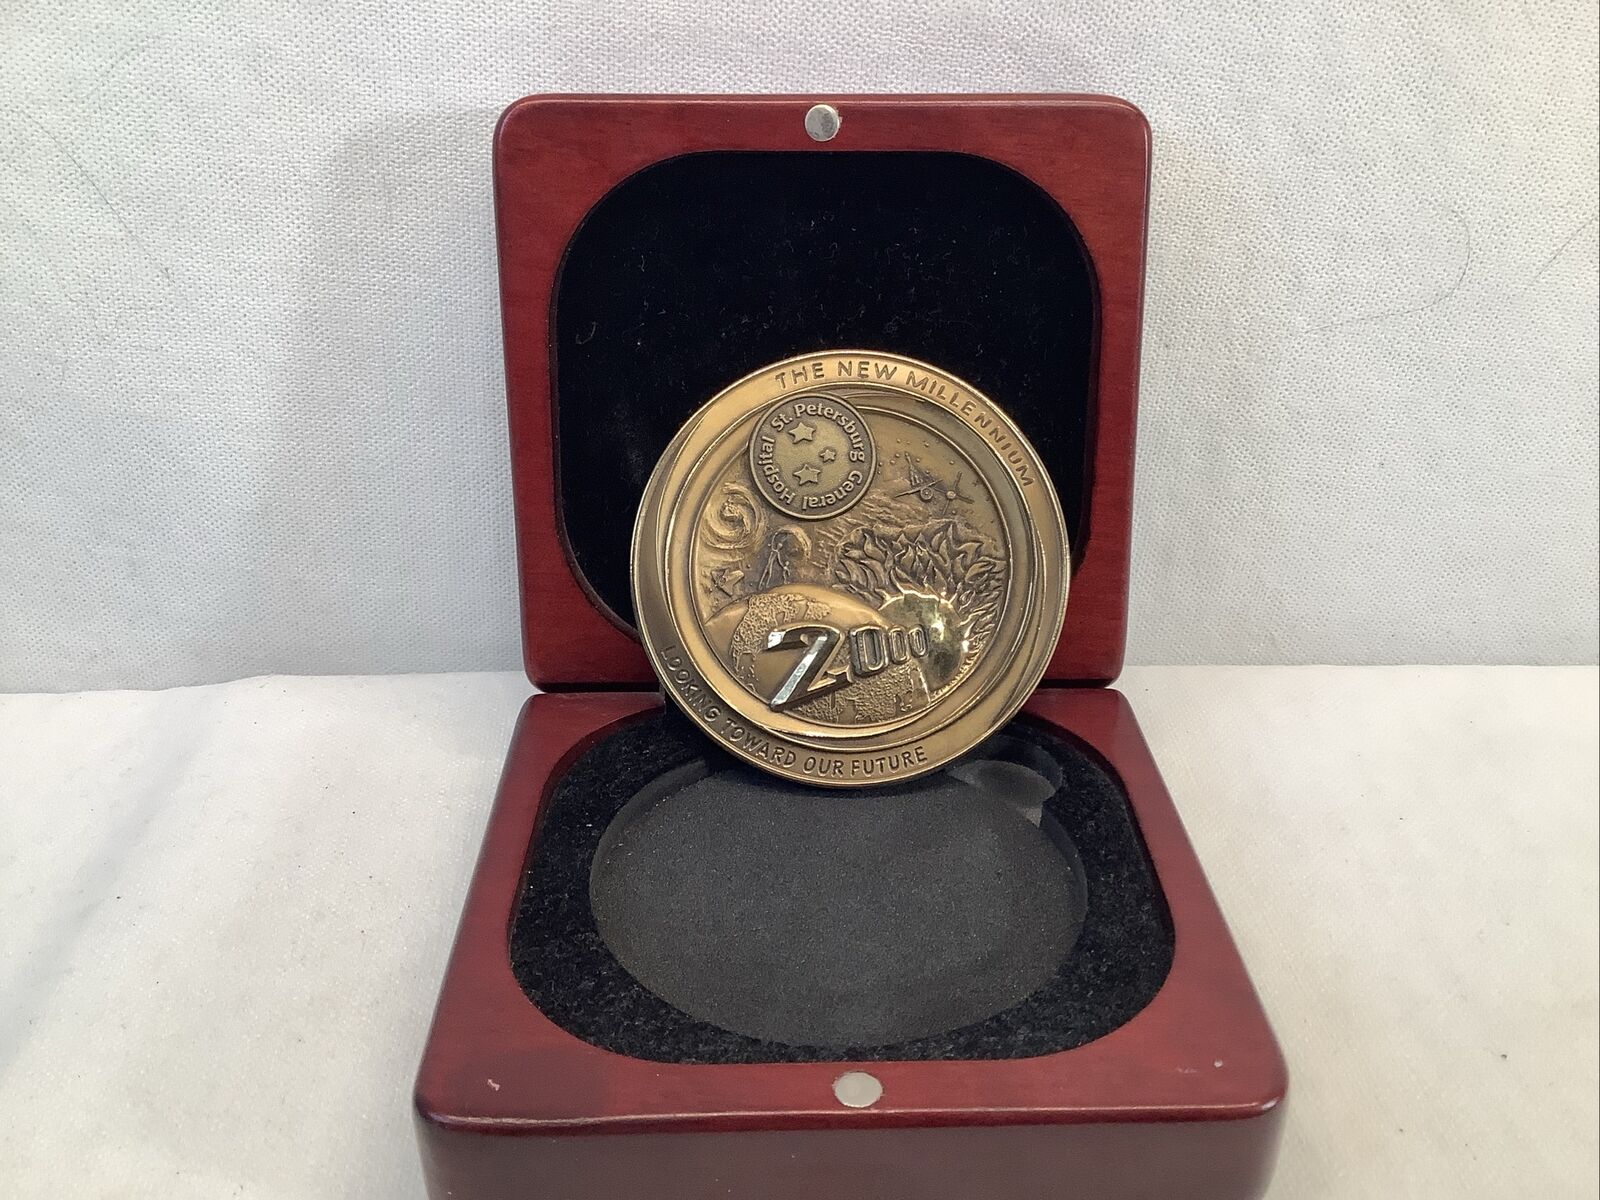 Saint Petersburg General Hospital brass commemorative coin/paperweight 2000